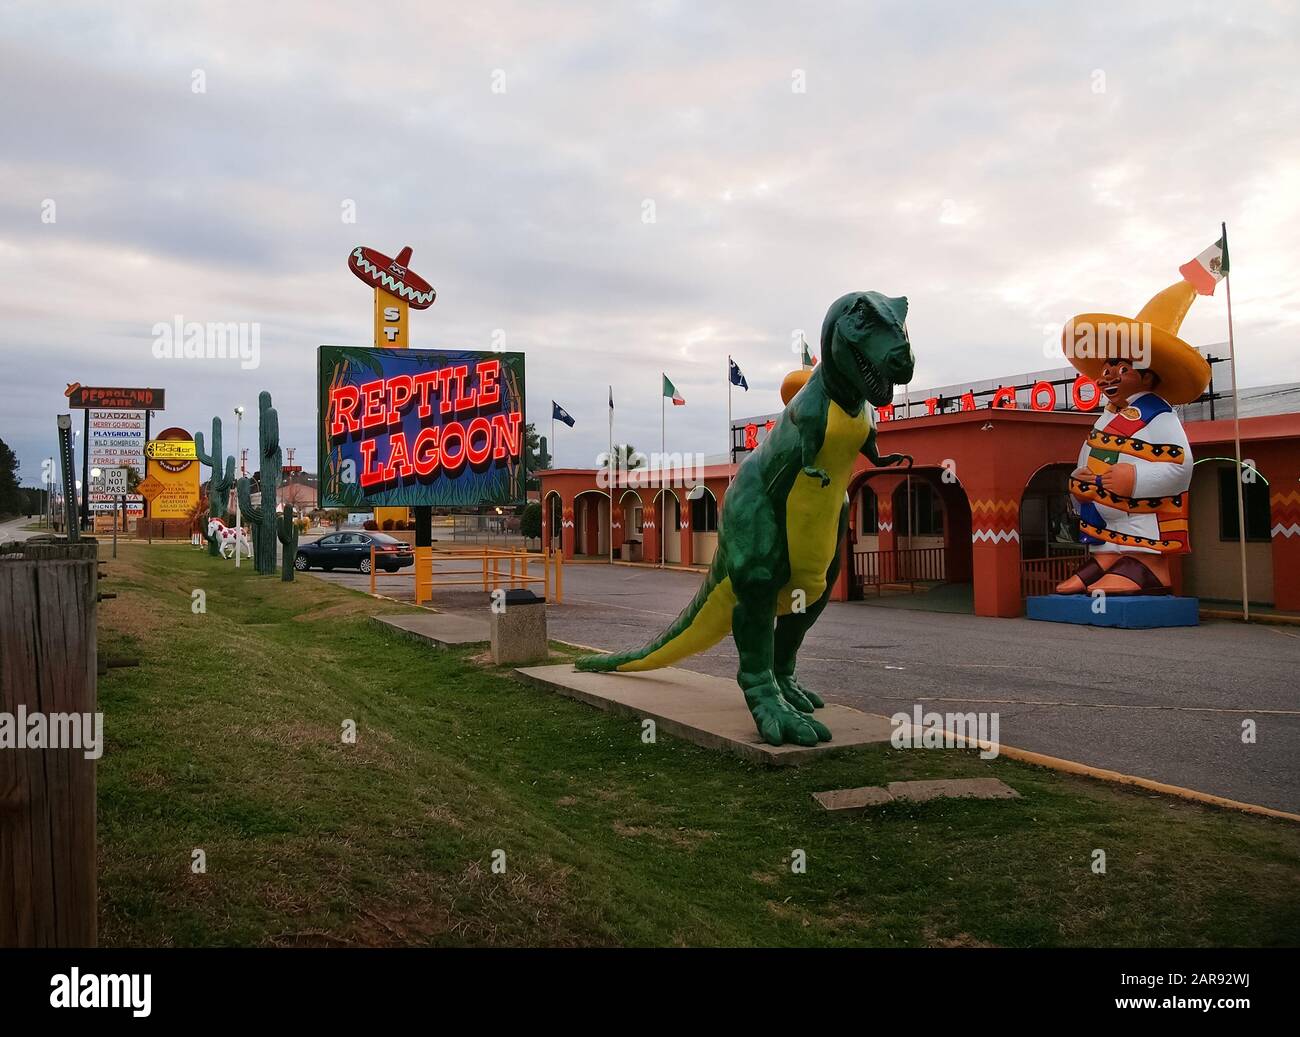 DILLON, SOUTH CAROLINA - FEBRUARY 18, 2018 : A large green fiberglass dinoursaur sculpture stands outside the Reptile Lagoon, a roadside attraction ju Stock Photo